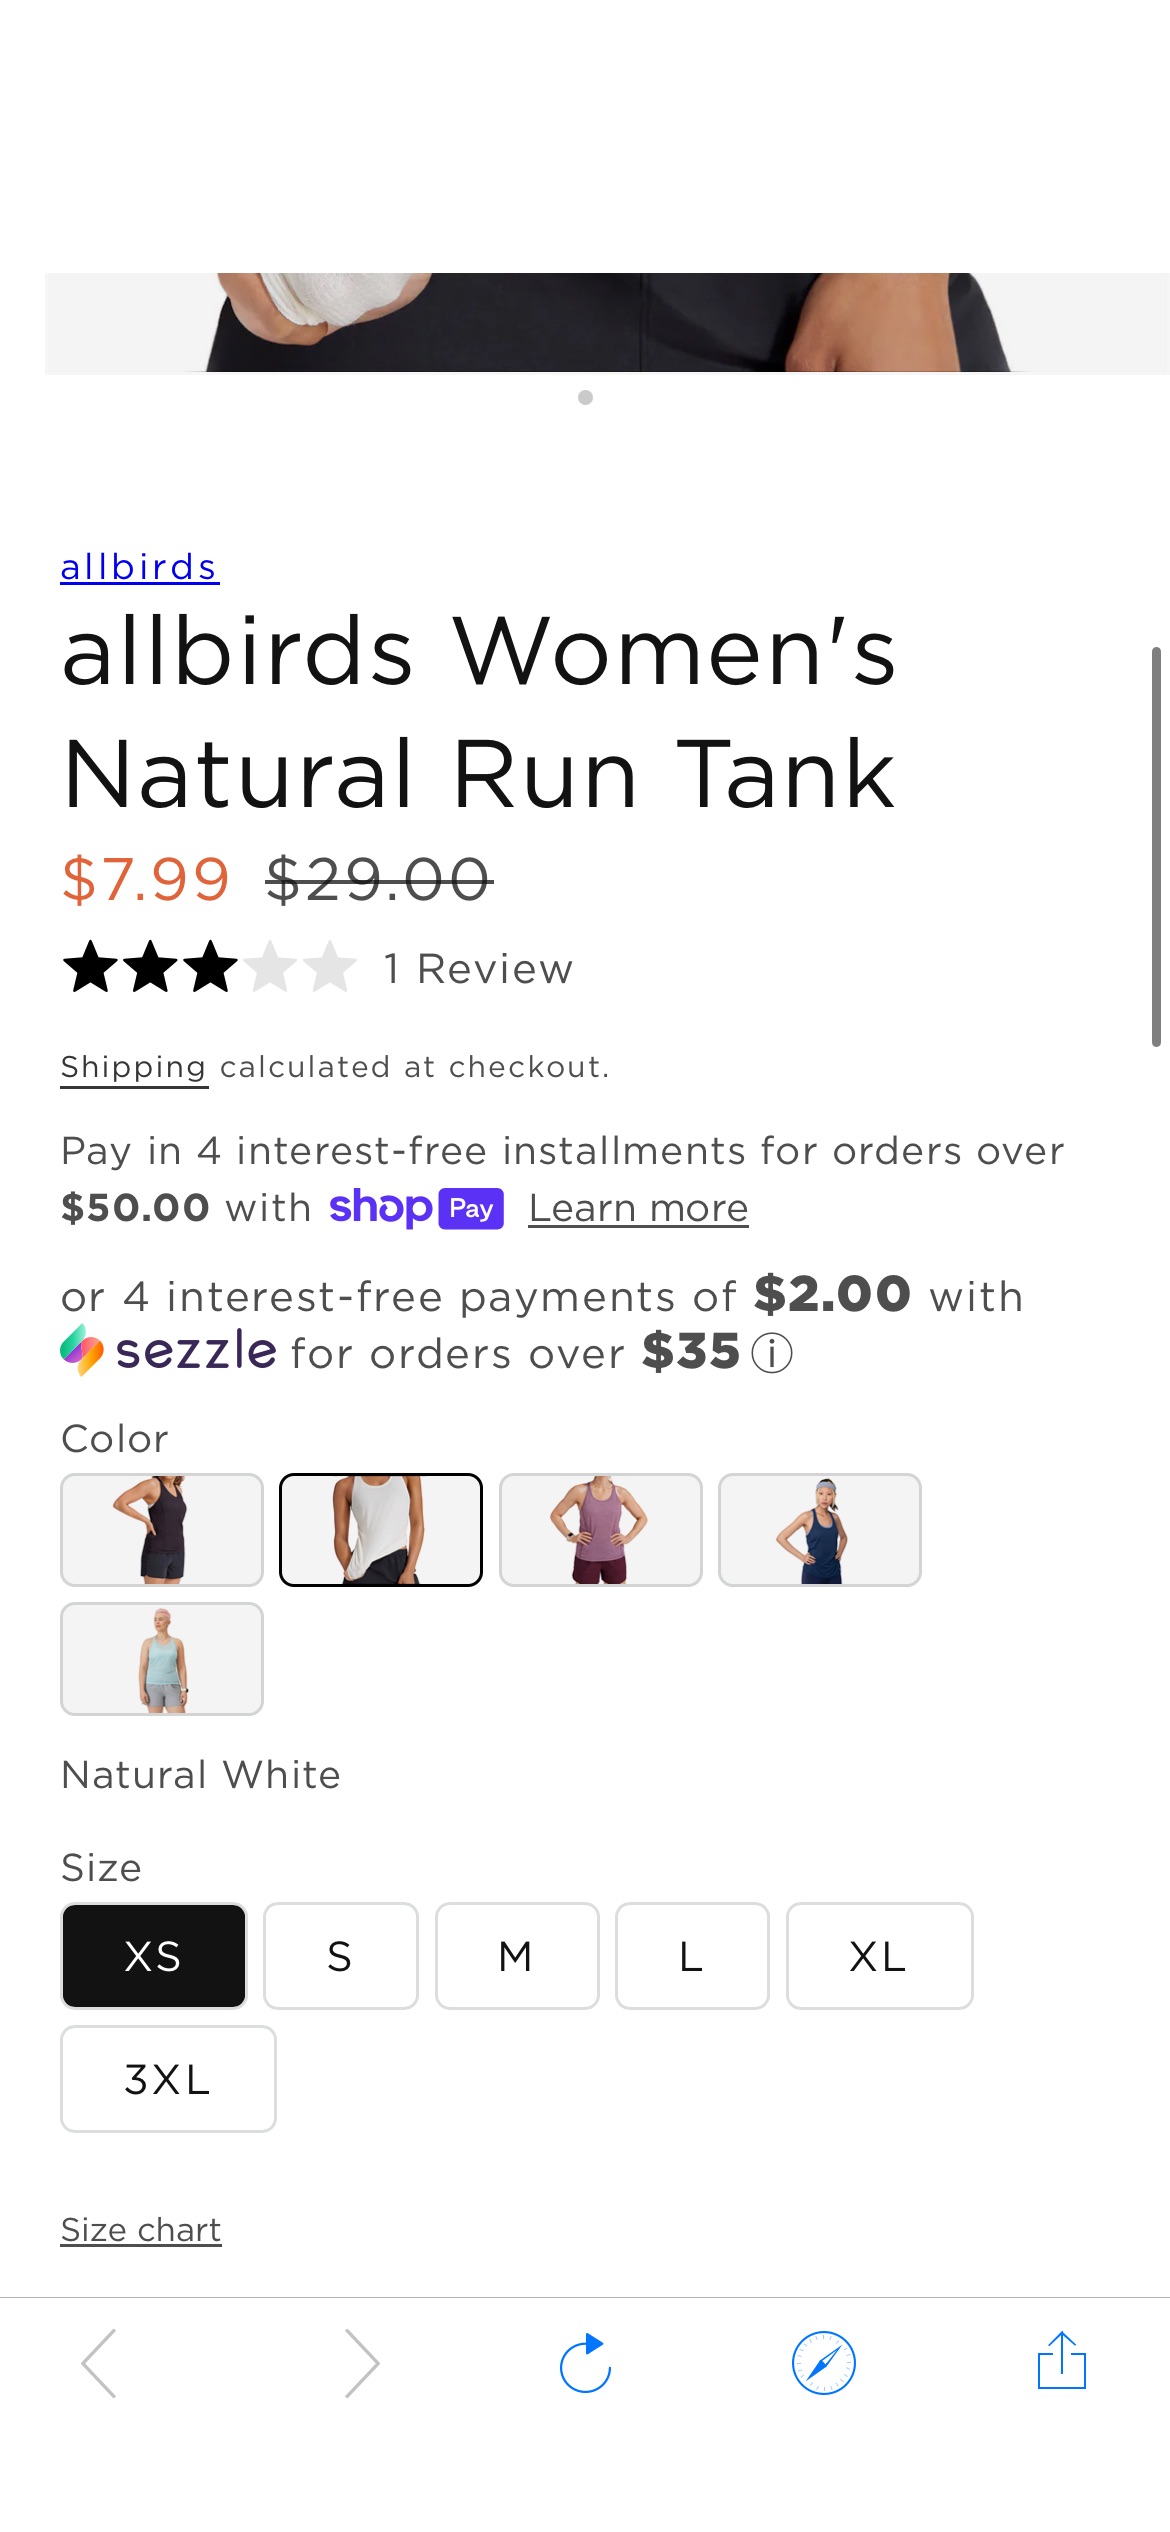 allbirds Women's Natural Run Tank – PROOZY Proozy：今天只需8美元就为allbirds Women's Natural Run Tank得分。

立即抓住你的